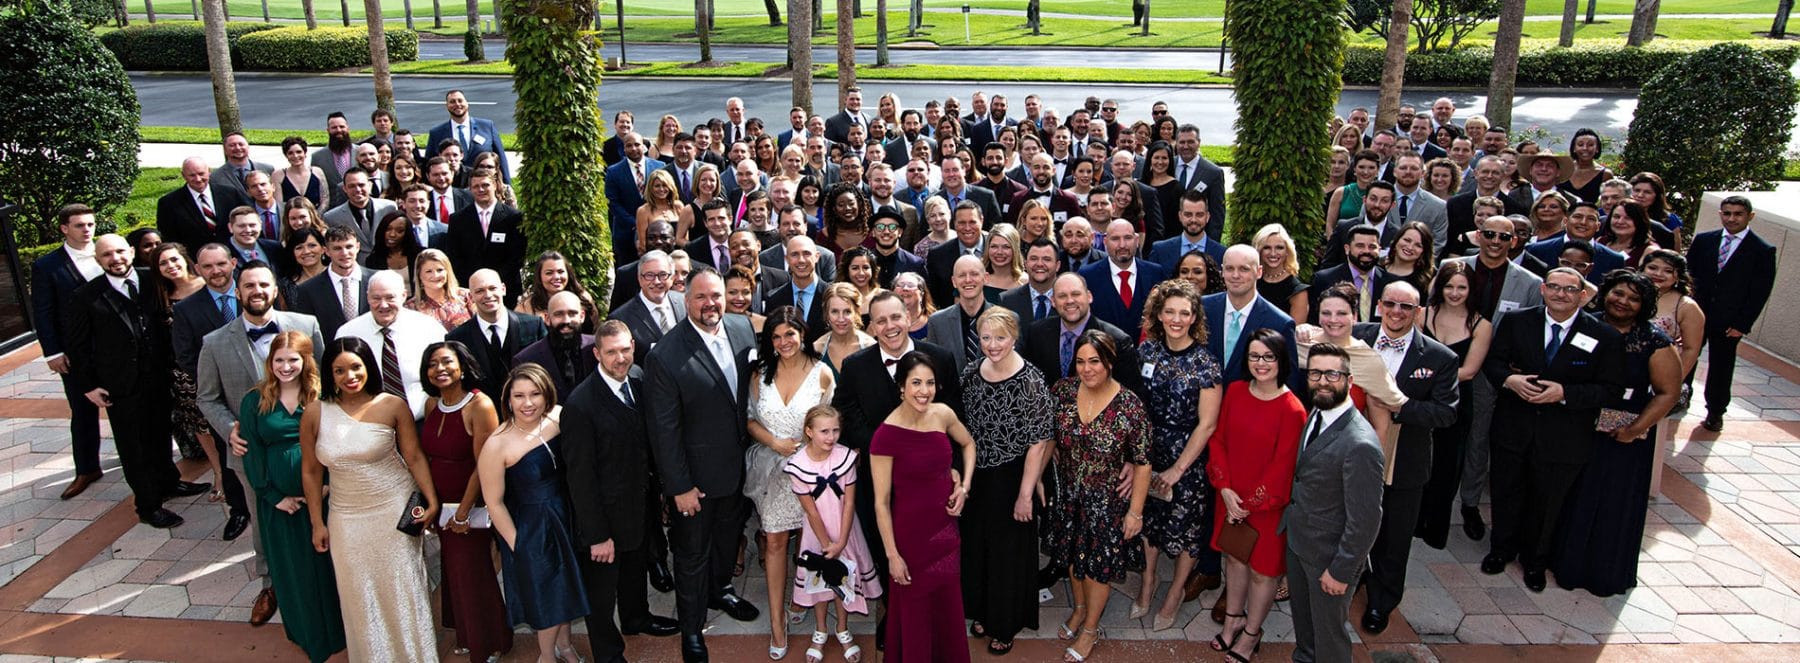 2019-banquet-group-photo